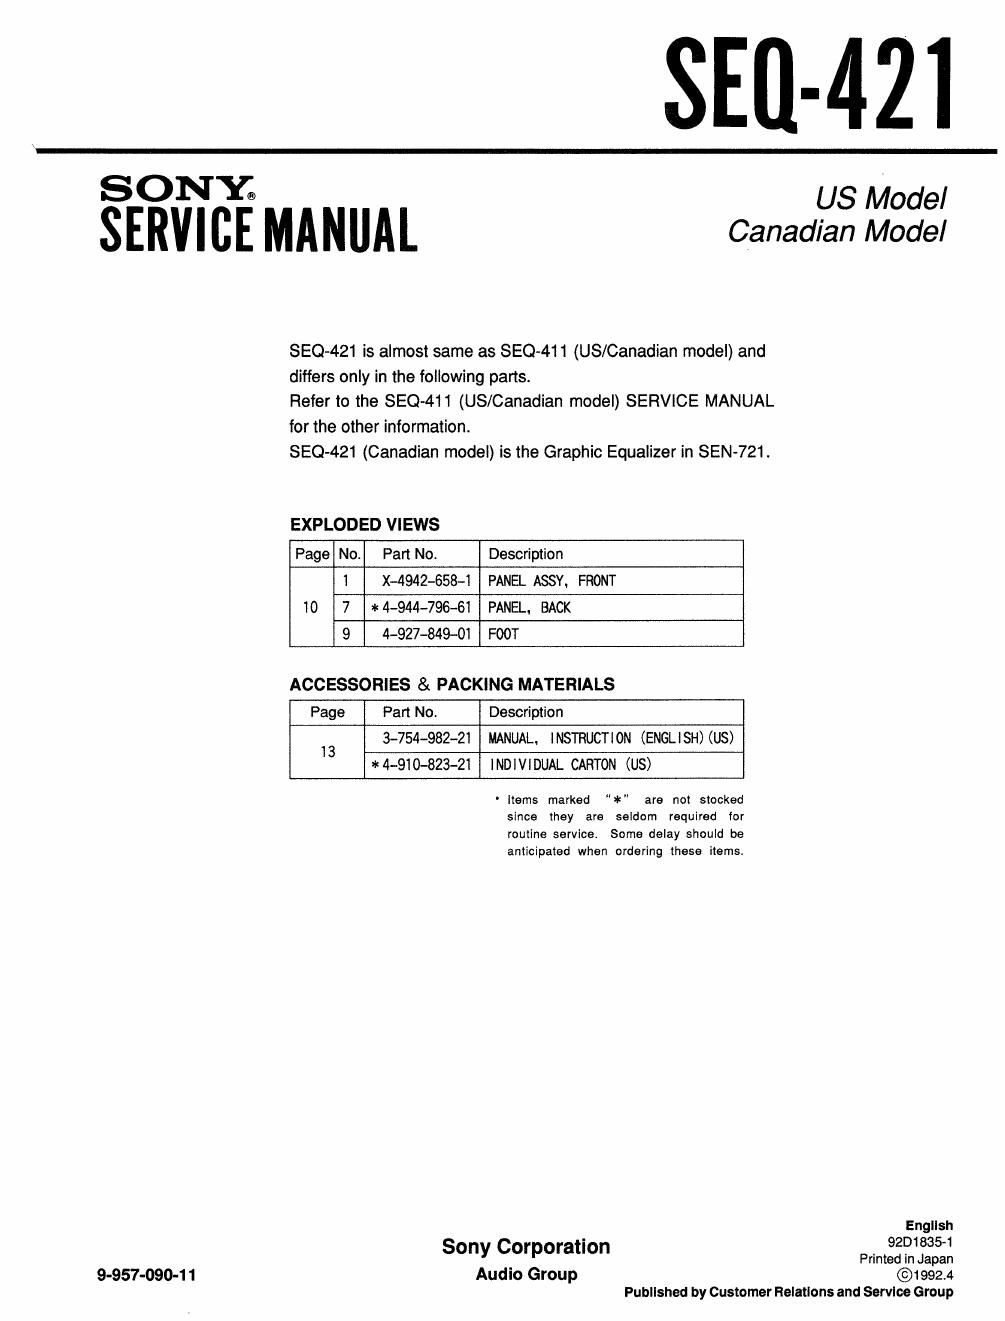 sony seq 421 service manual